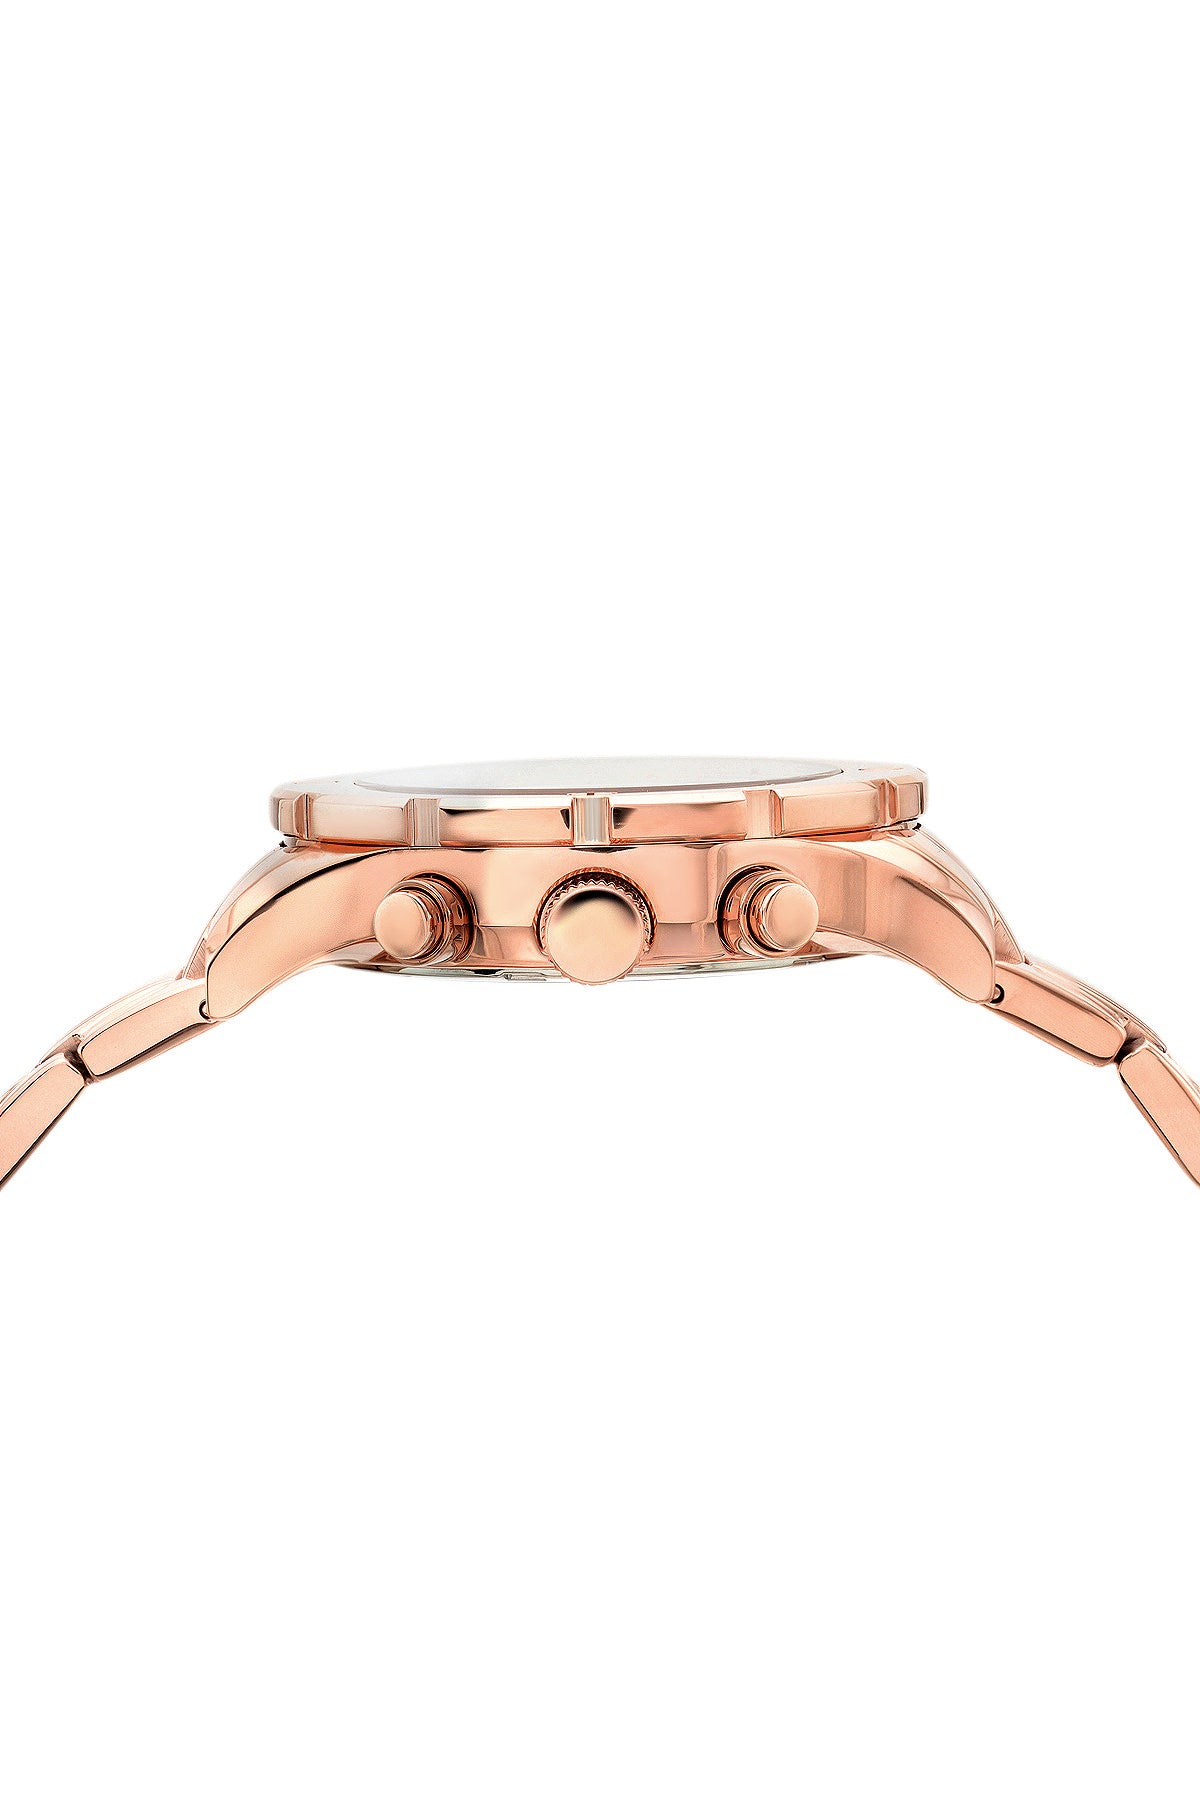 Porsamo Bleu Charlotte luxury chronograph women's stainless steel watch, rose 381CCHS